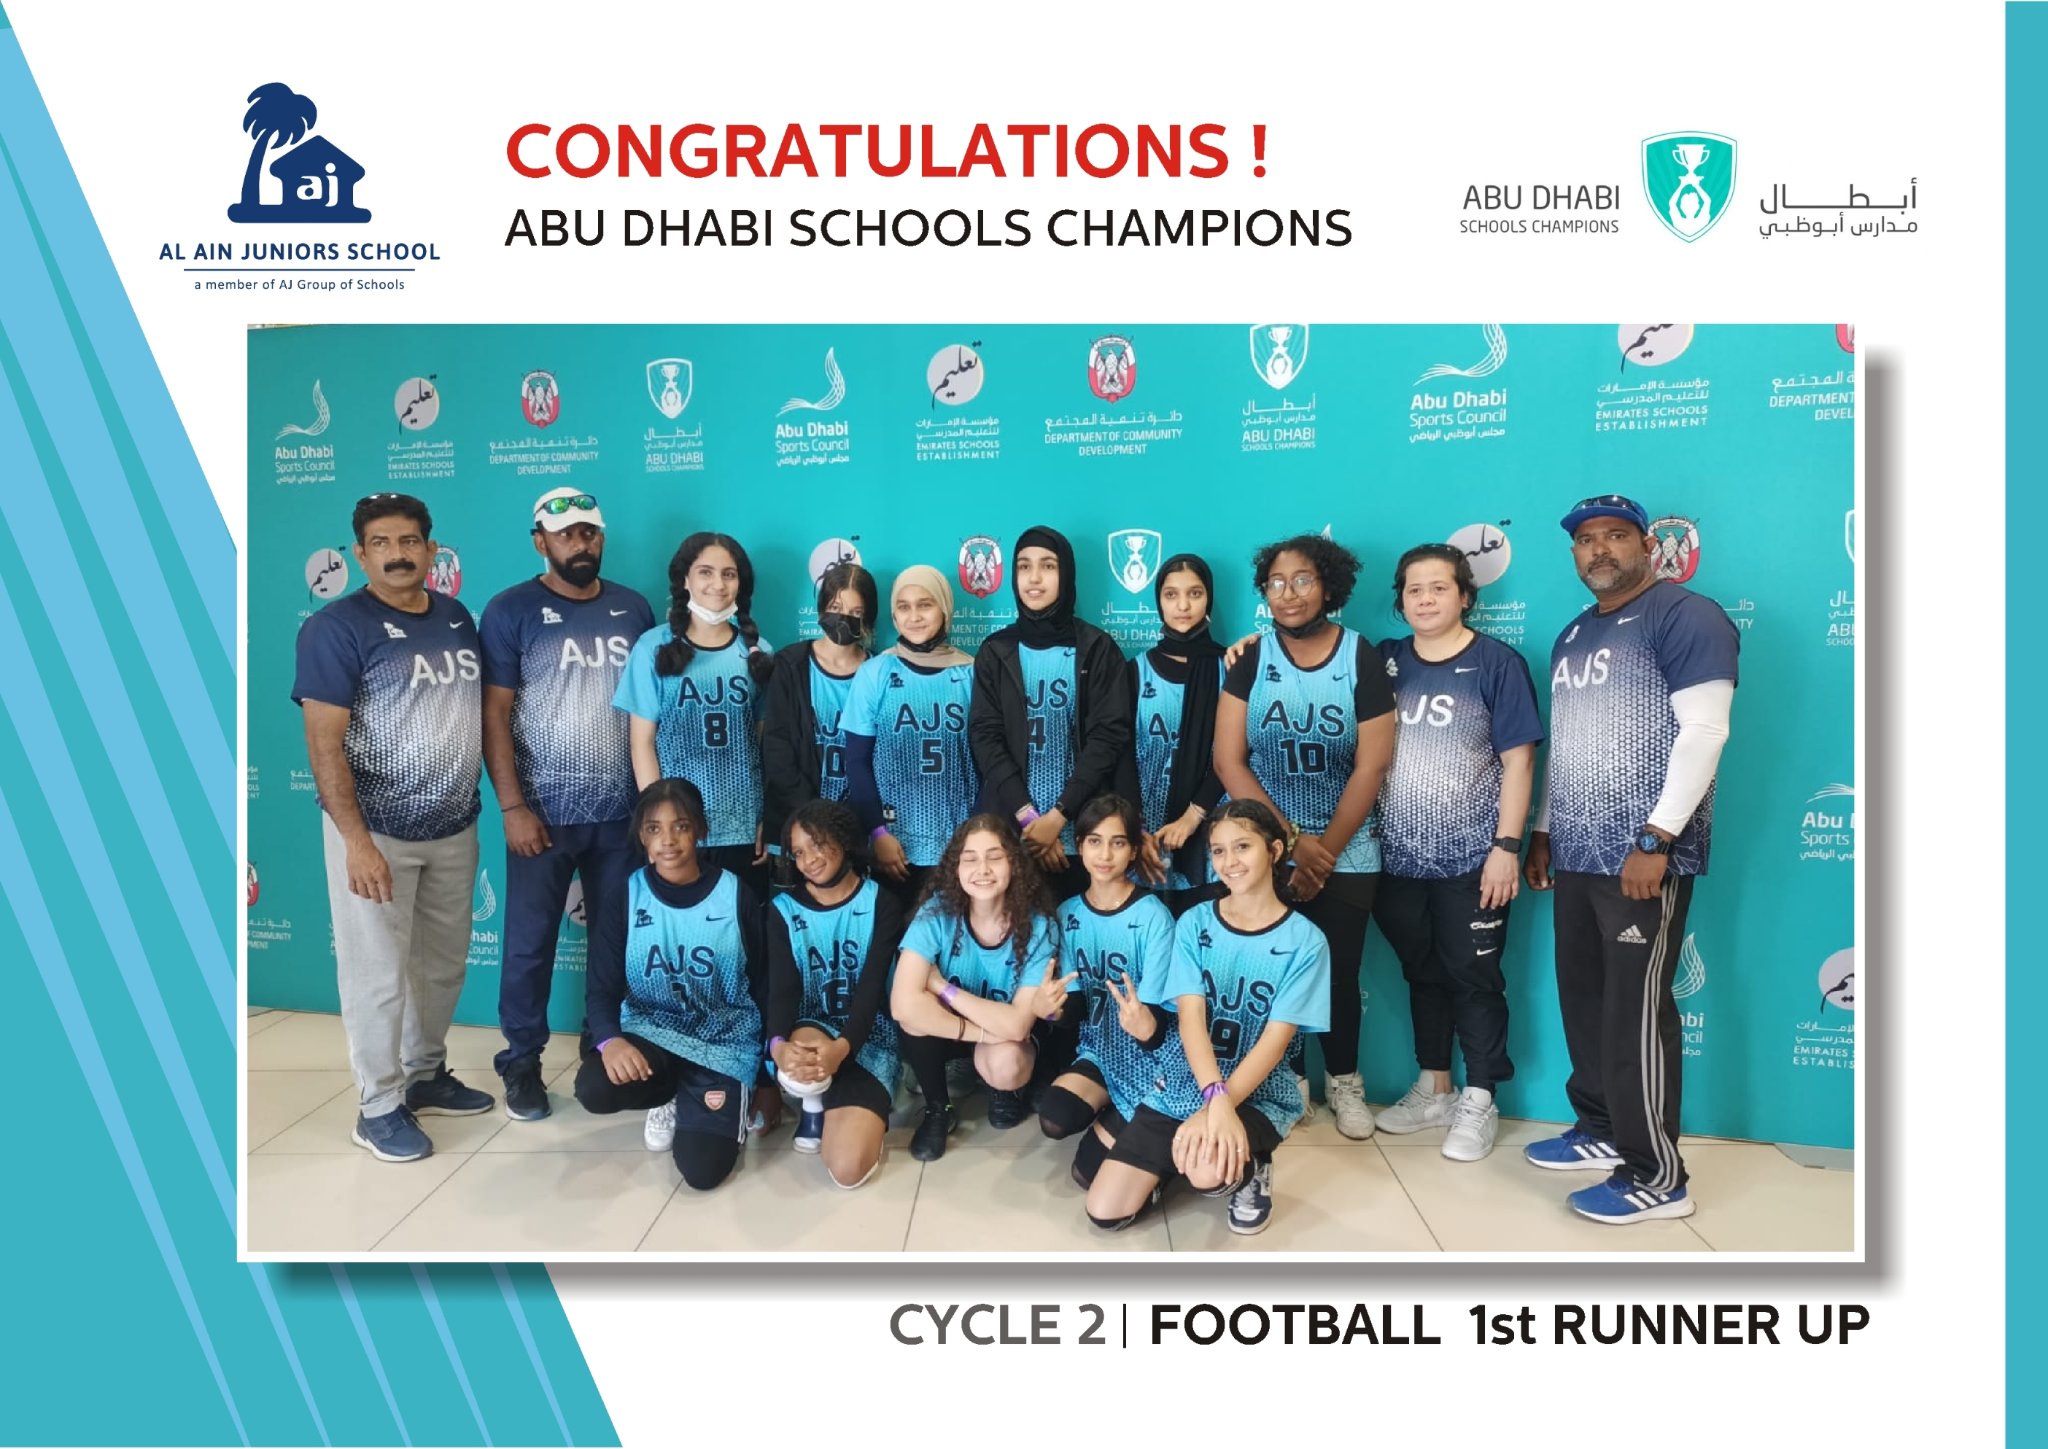 Abu Dhabi Schools Champions 5